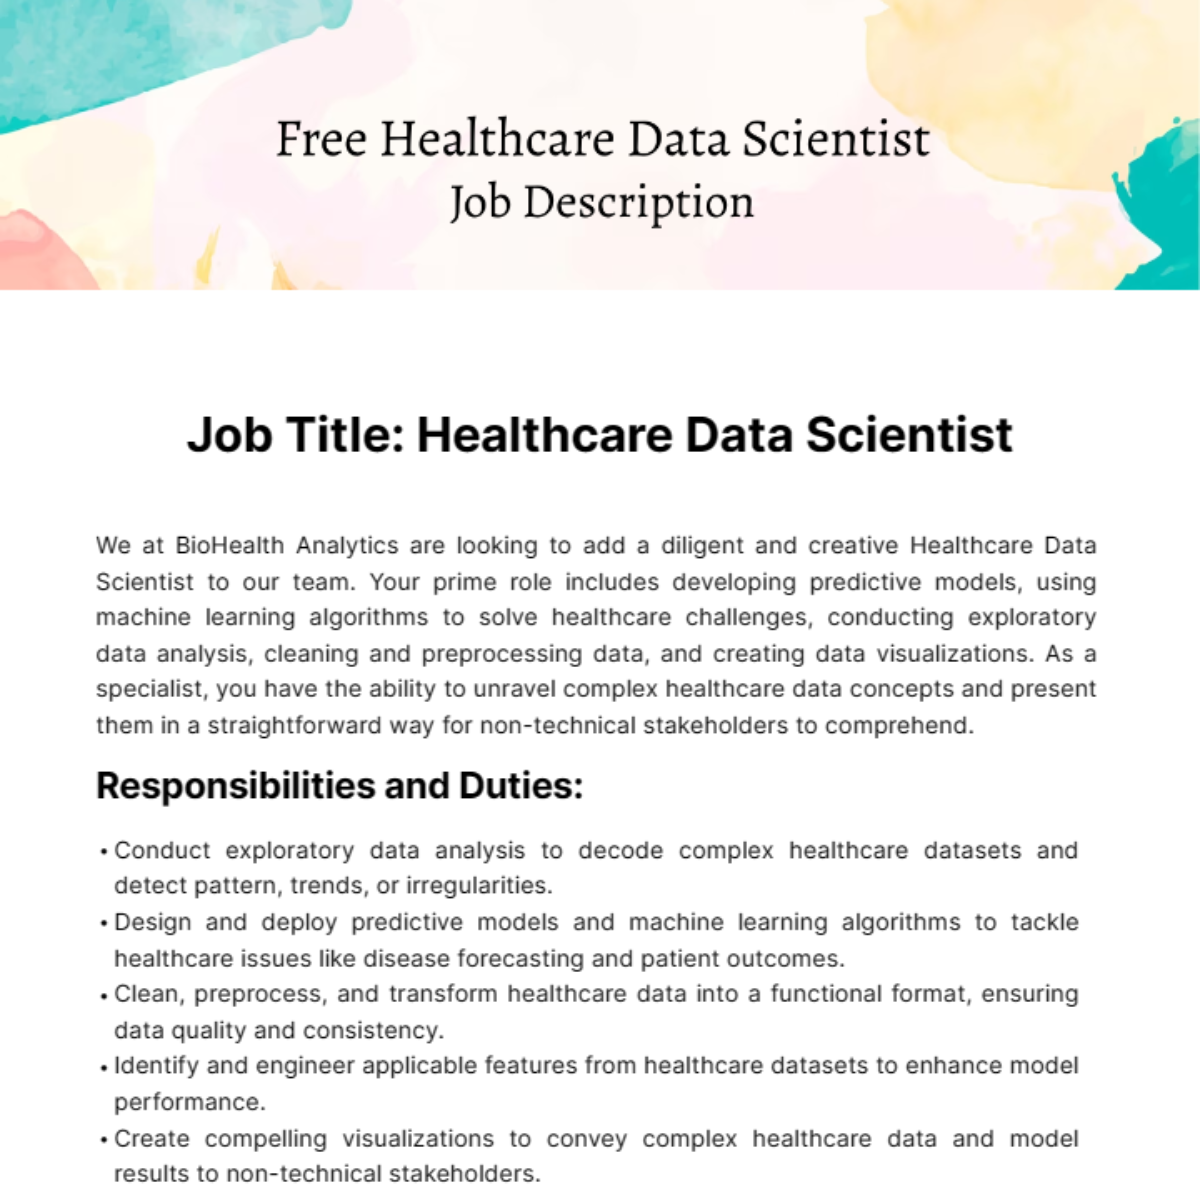 Free Healthcare Data Scientist Job Description Template